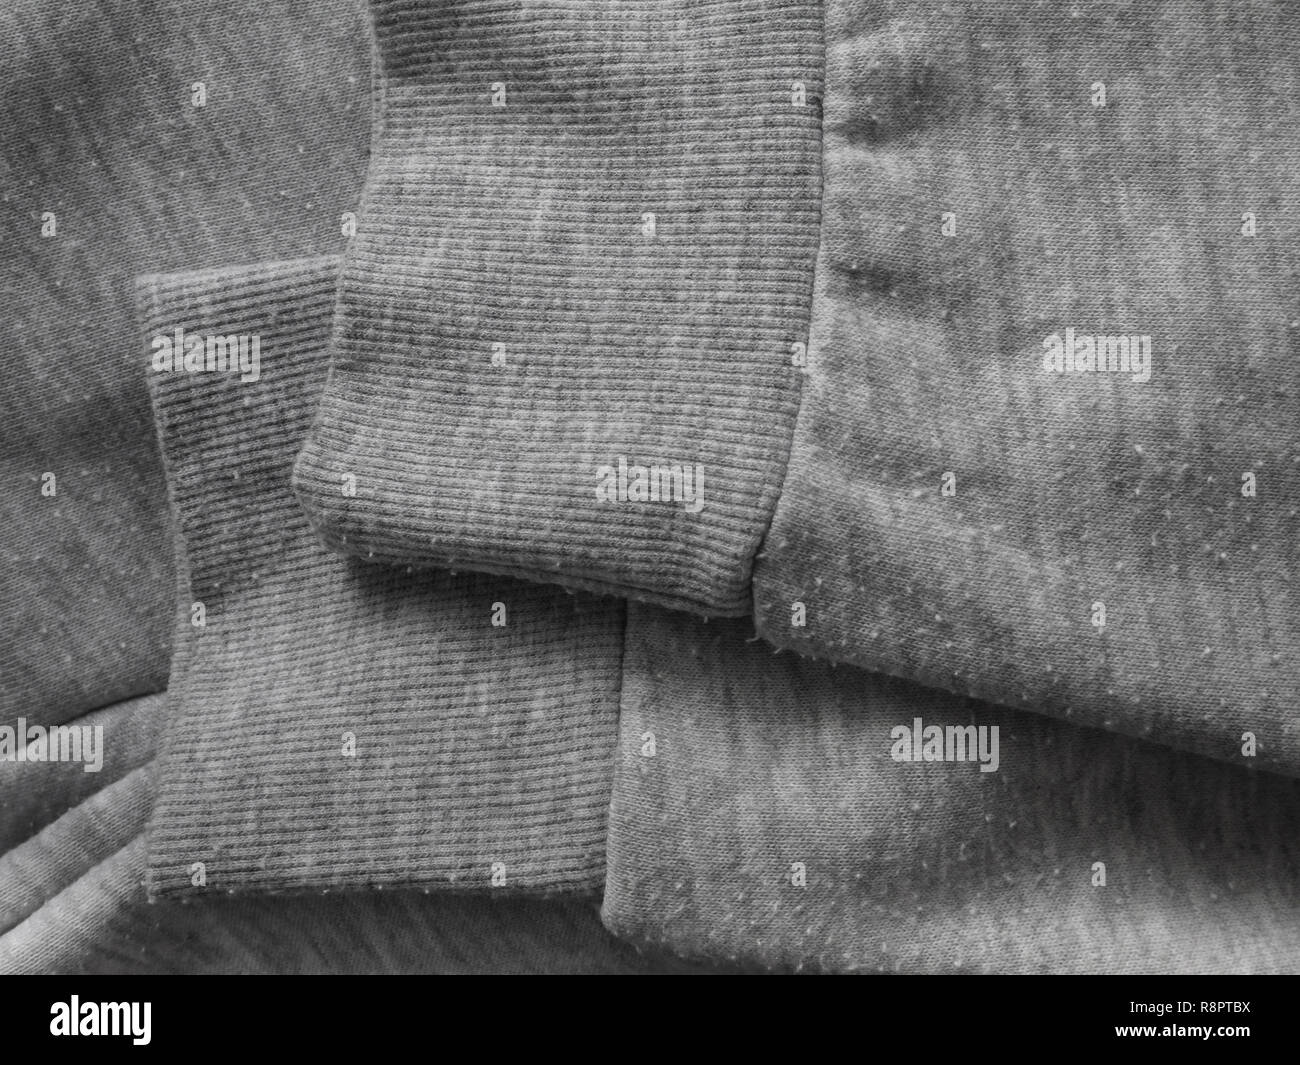 Pills on the heather gray sweatshirt cotton knit fabric. Bobbles on the knitwear. Stock Photo